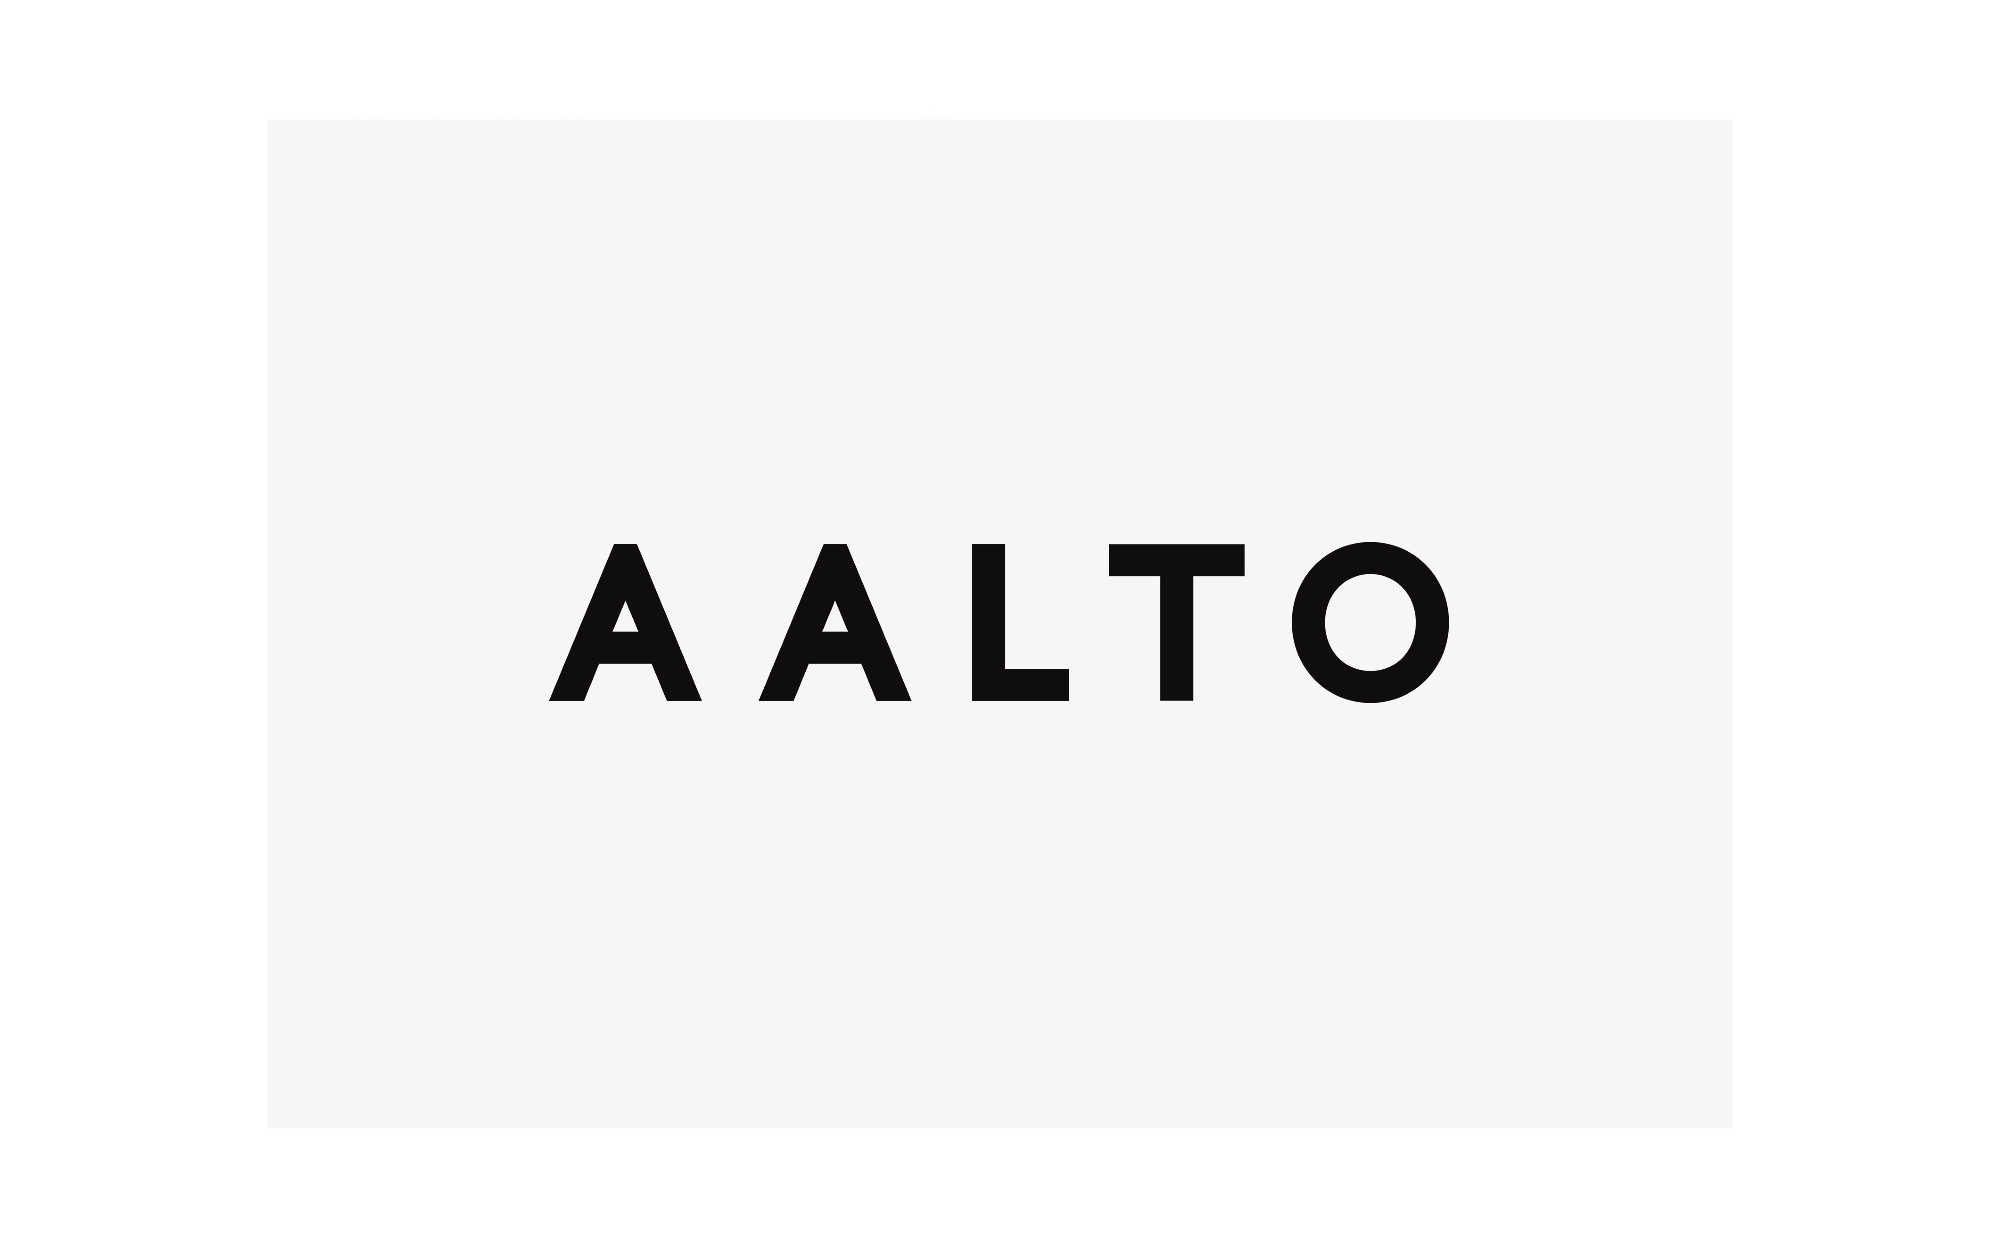 Daniel Baer – Branding and Identity.<i> Aalto</i>